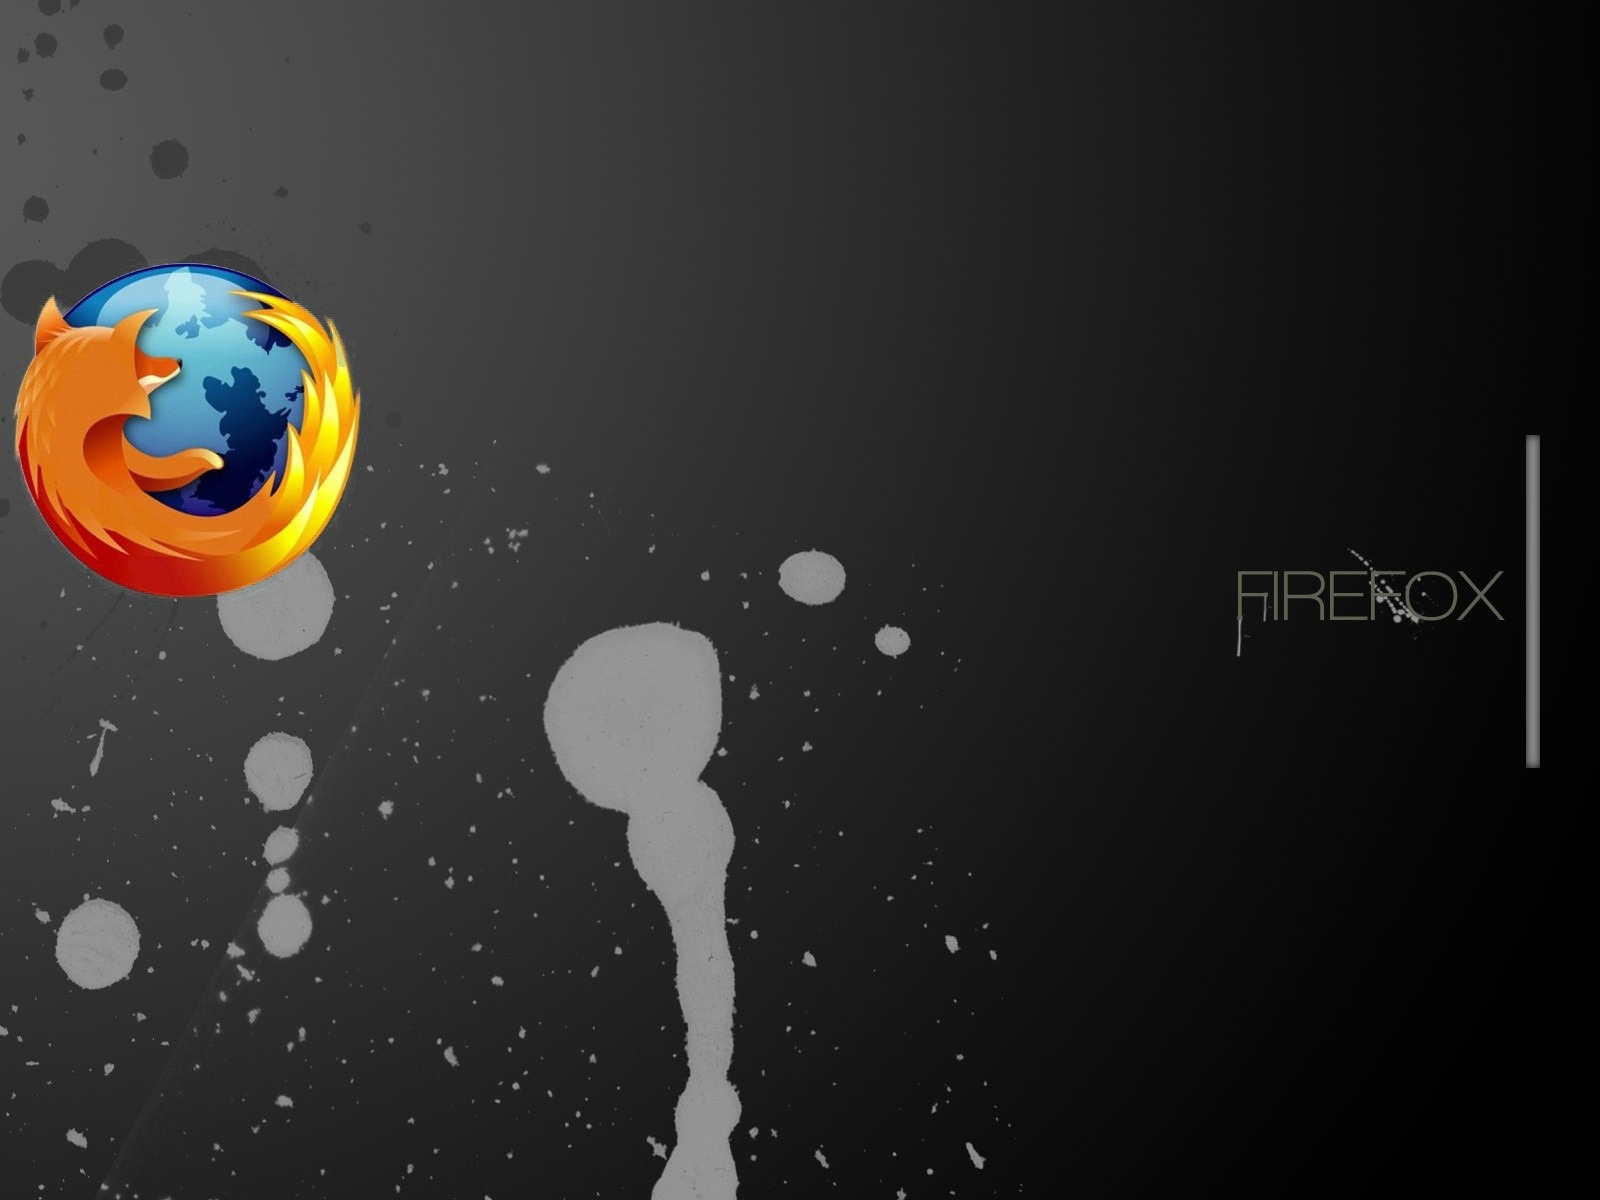 Firefox Splash for 1600 x 1200 resolution